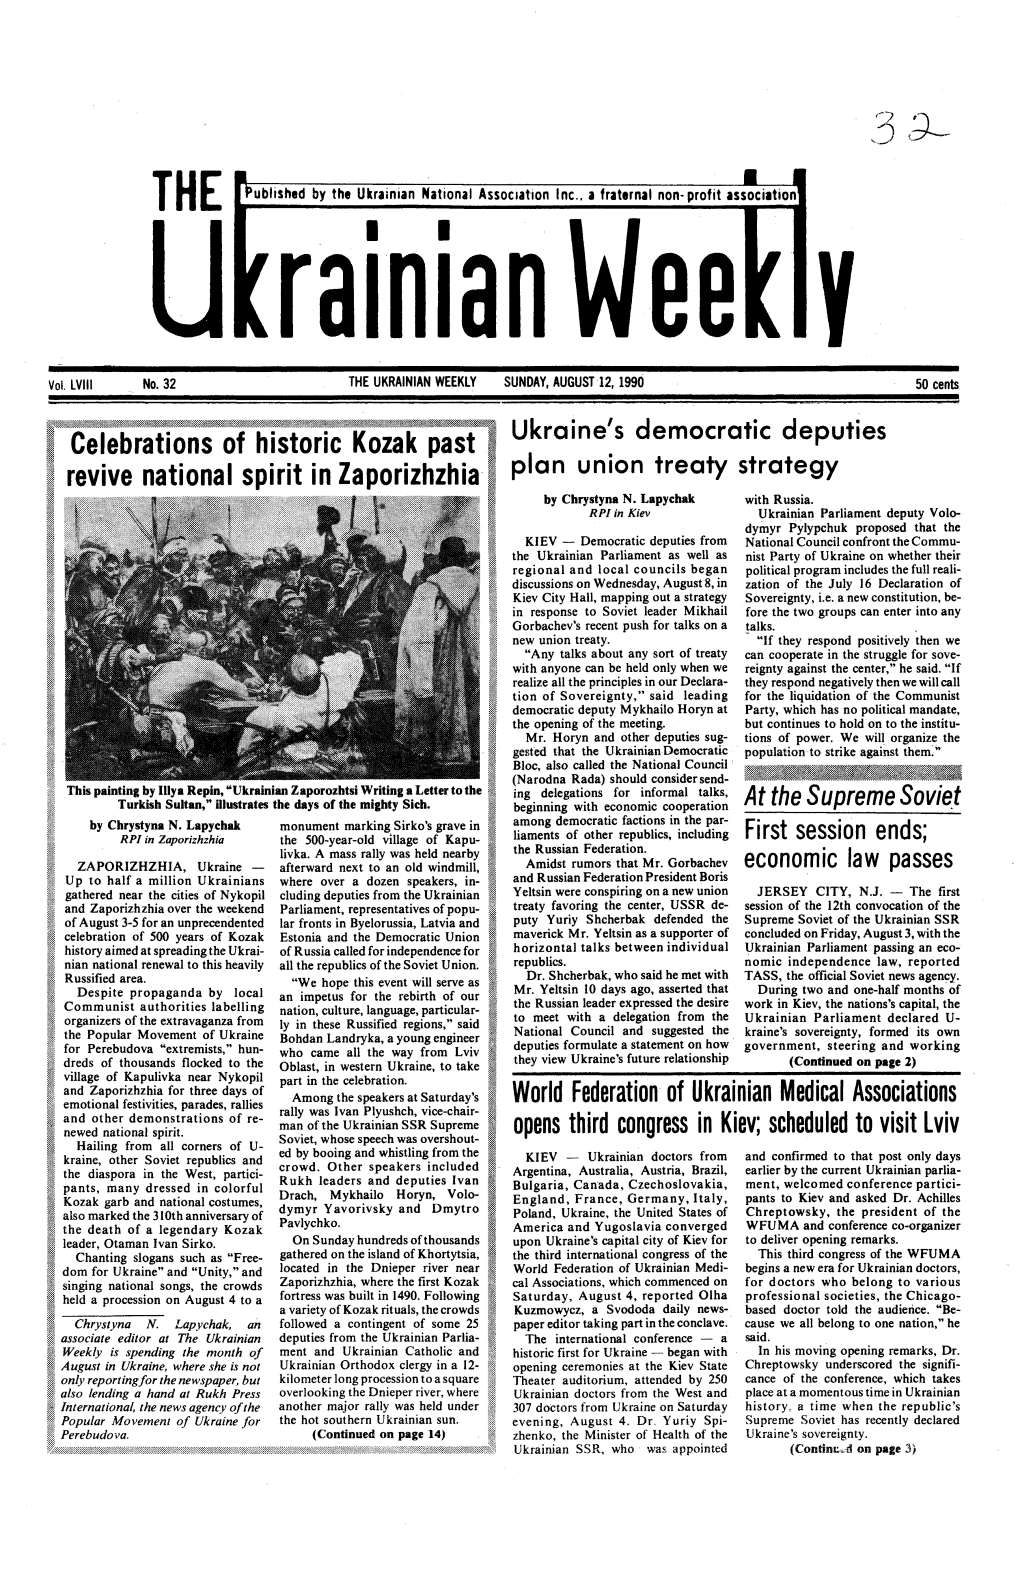 The Ukrainian Weekly 1990, No.32